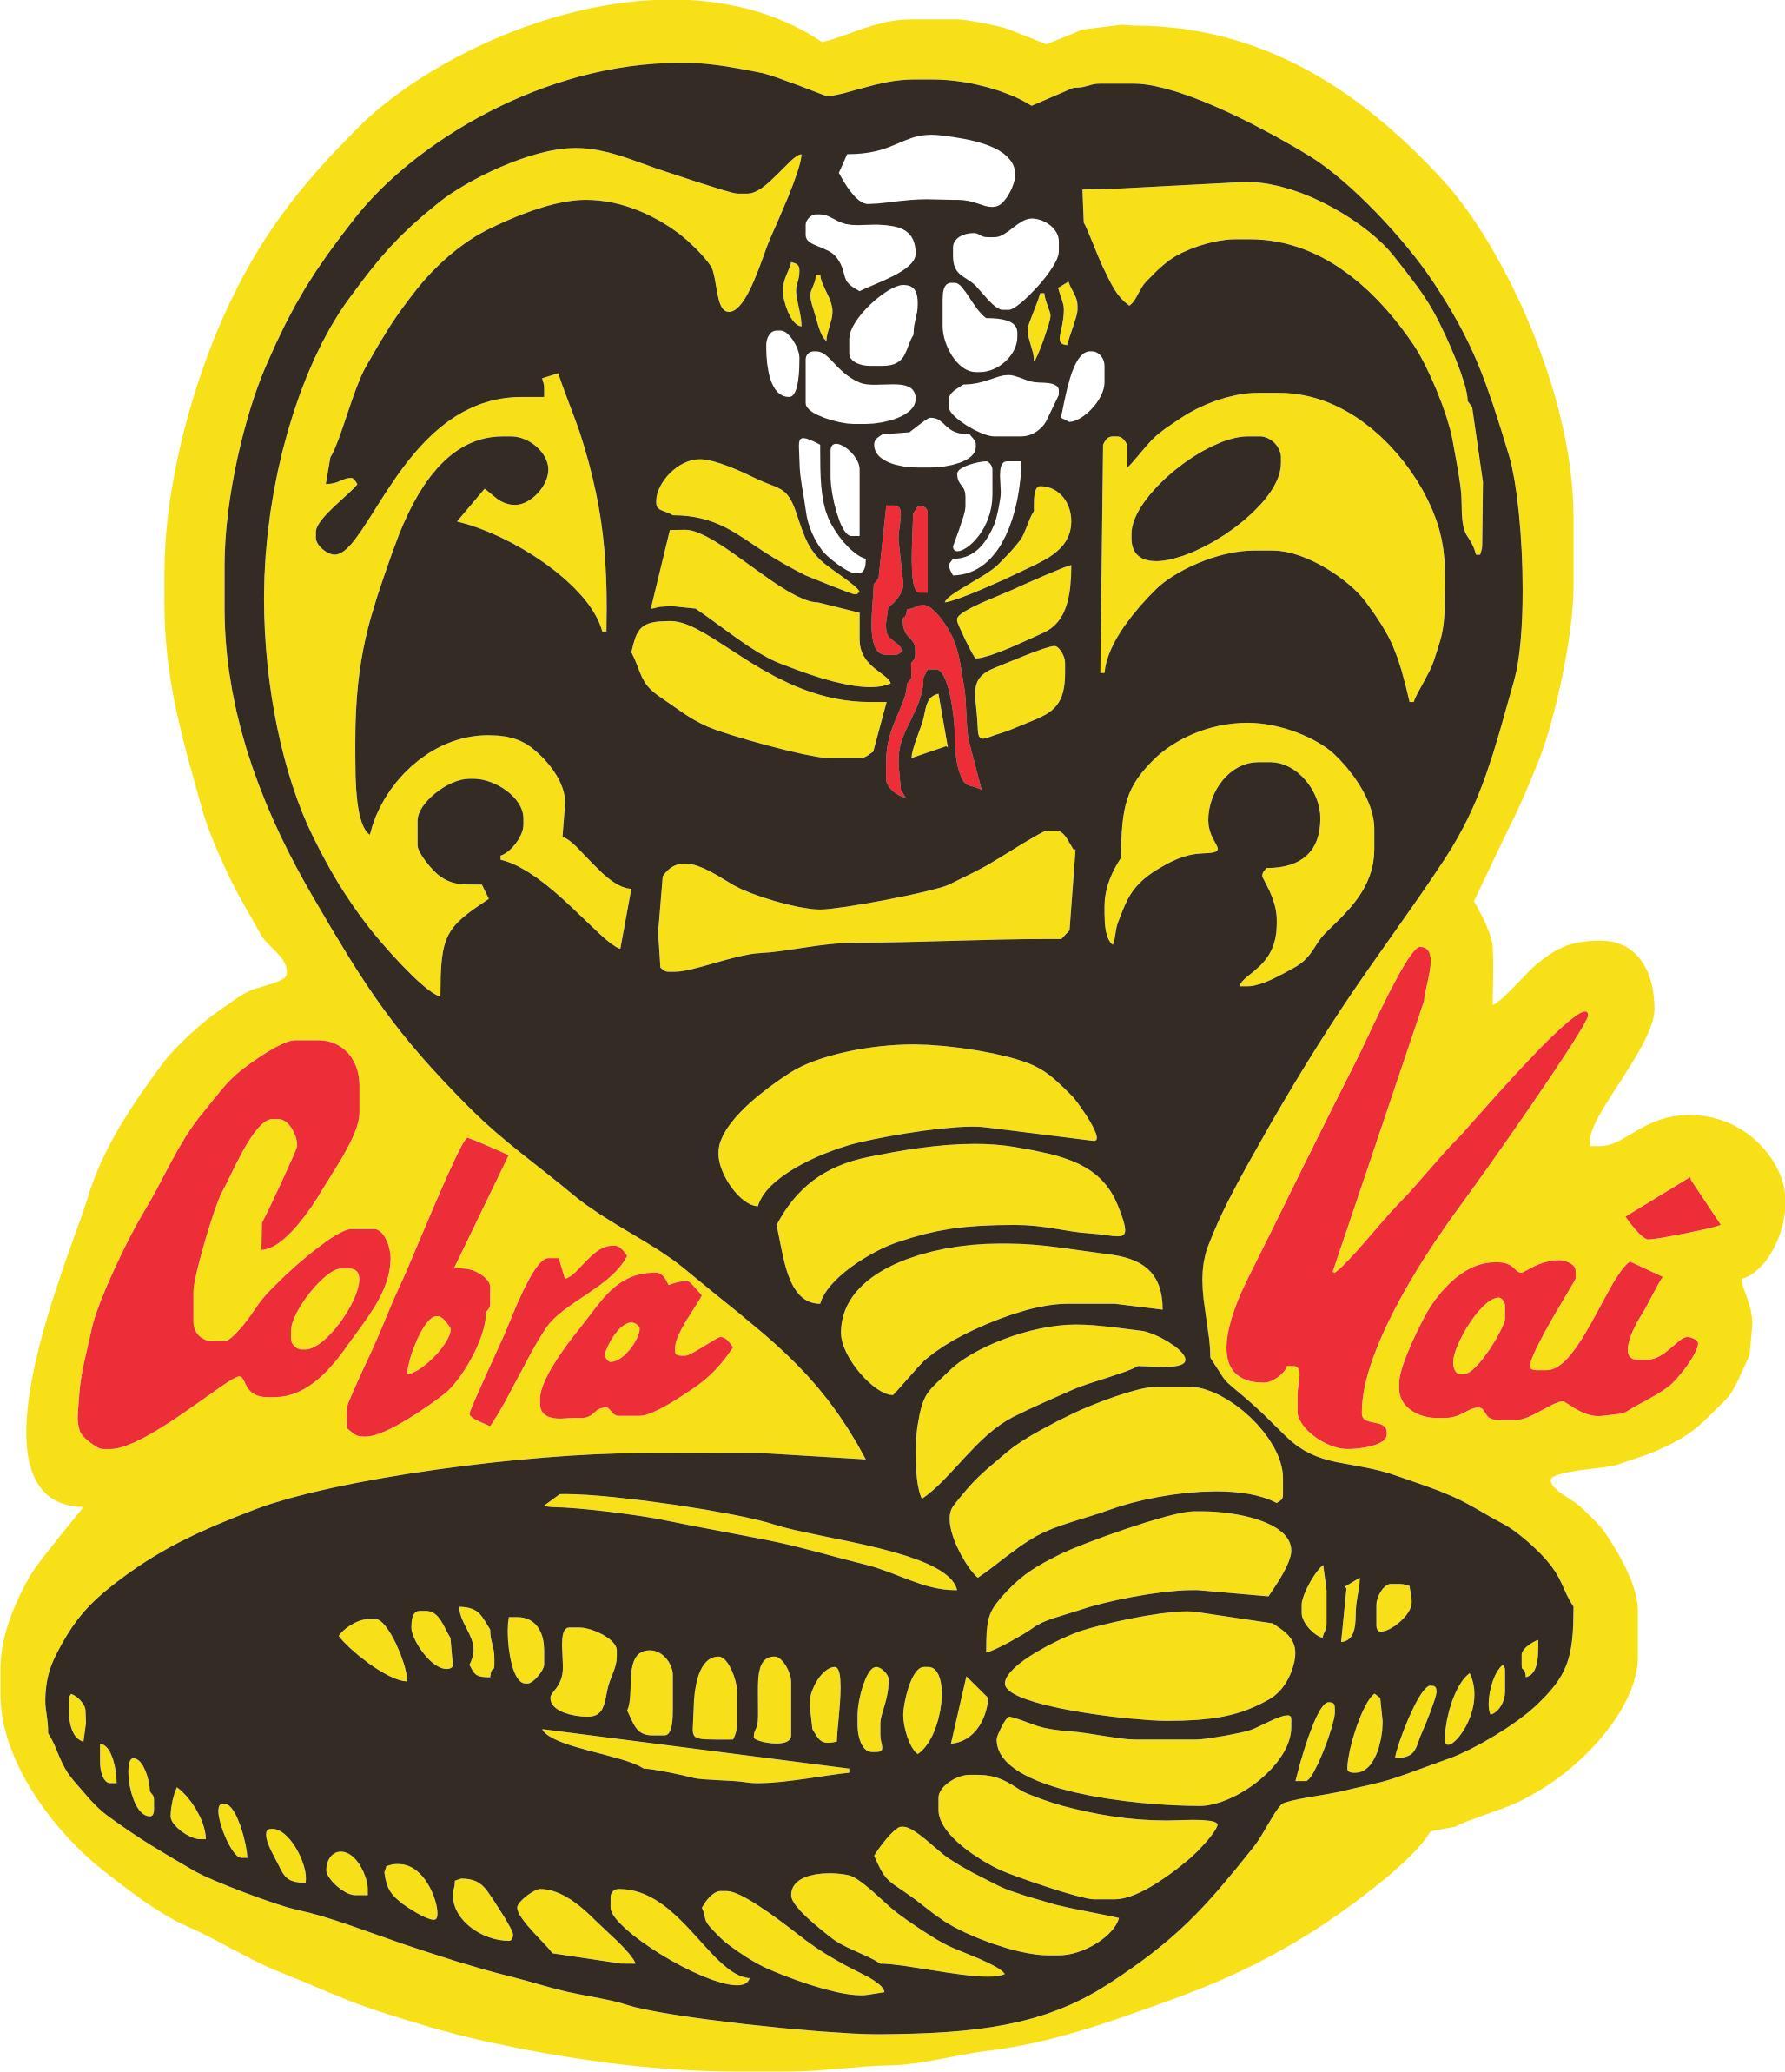 Cobra Kai Wallpapers  Top 25 Best Cobra Kai Wallpapers Download